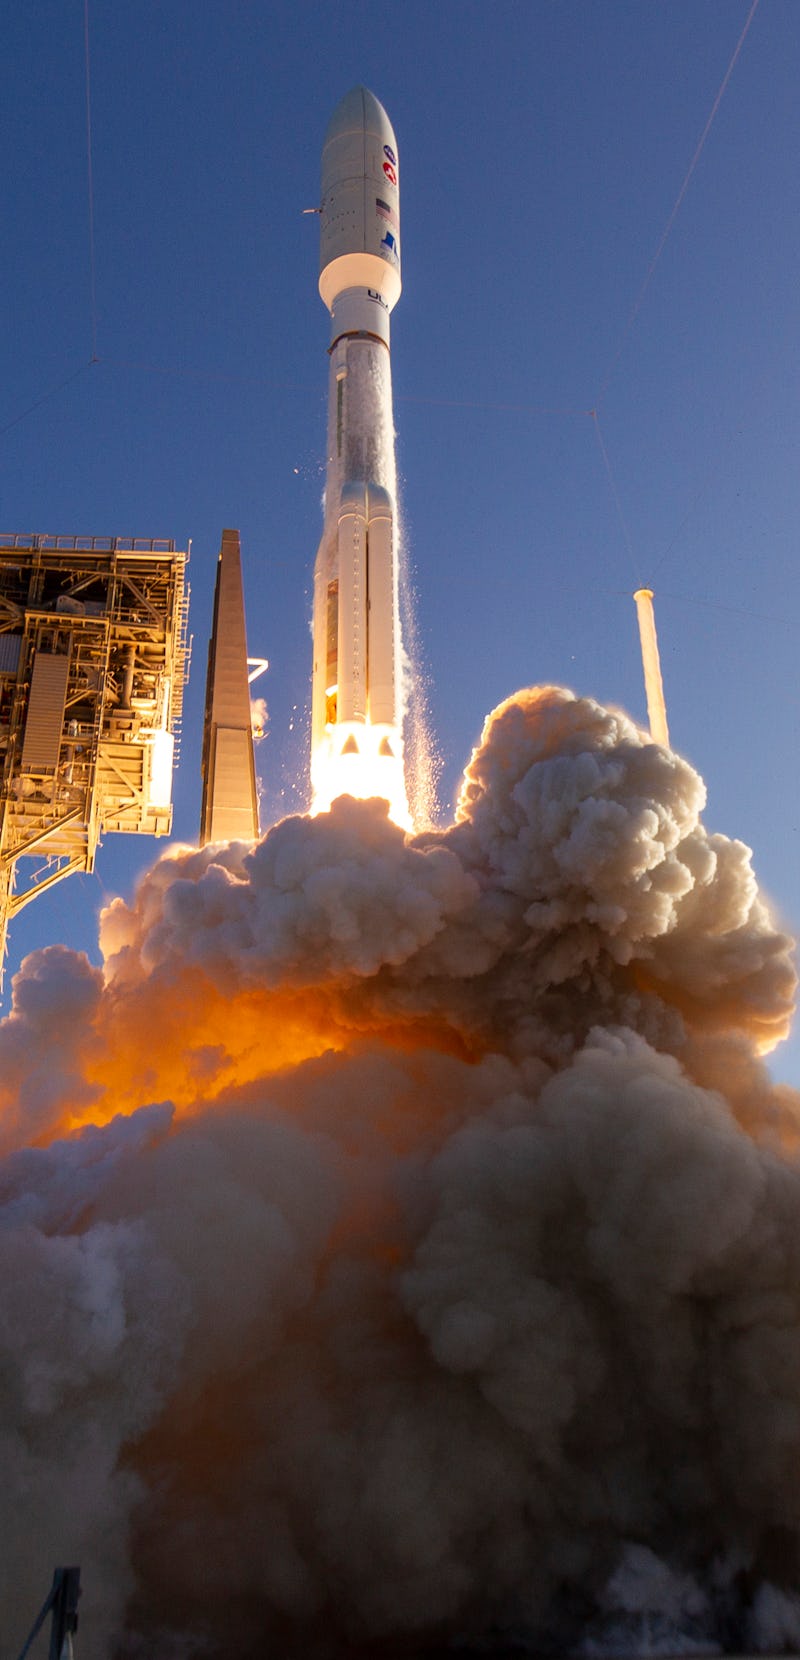 A United Launch Alliance (ULA) Atlas V rocket launch